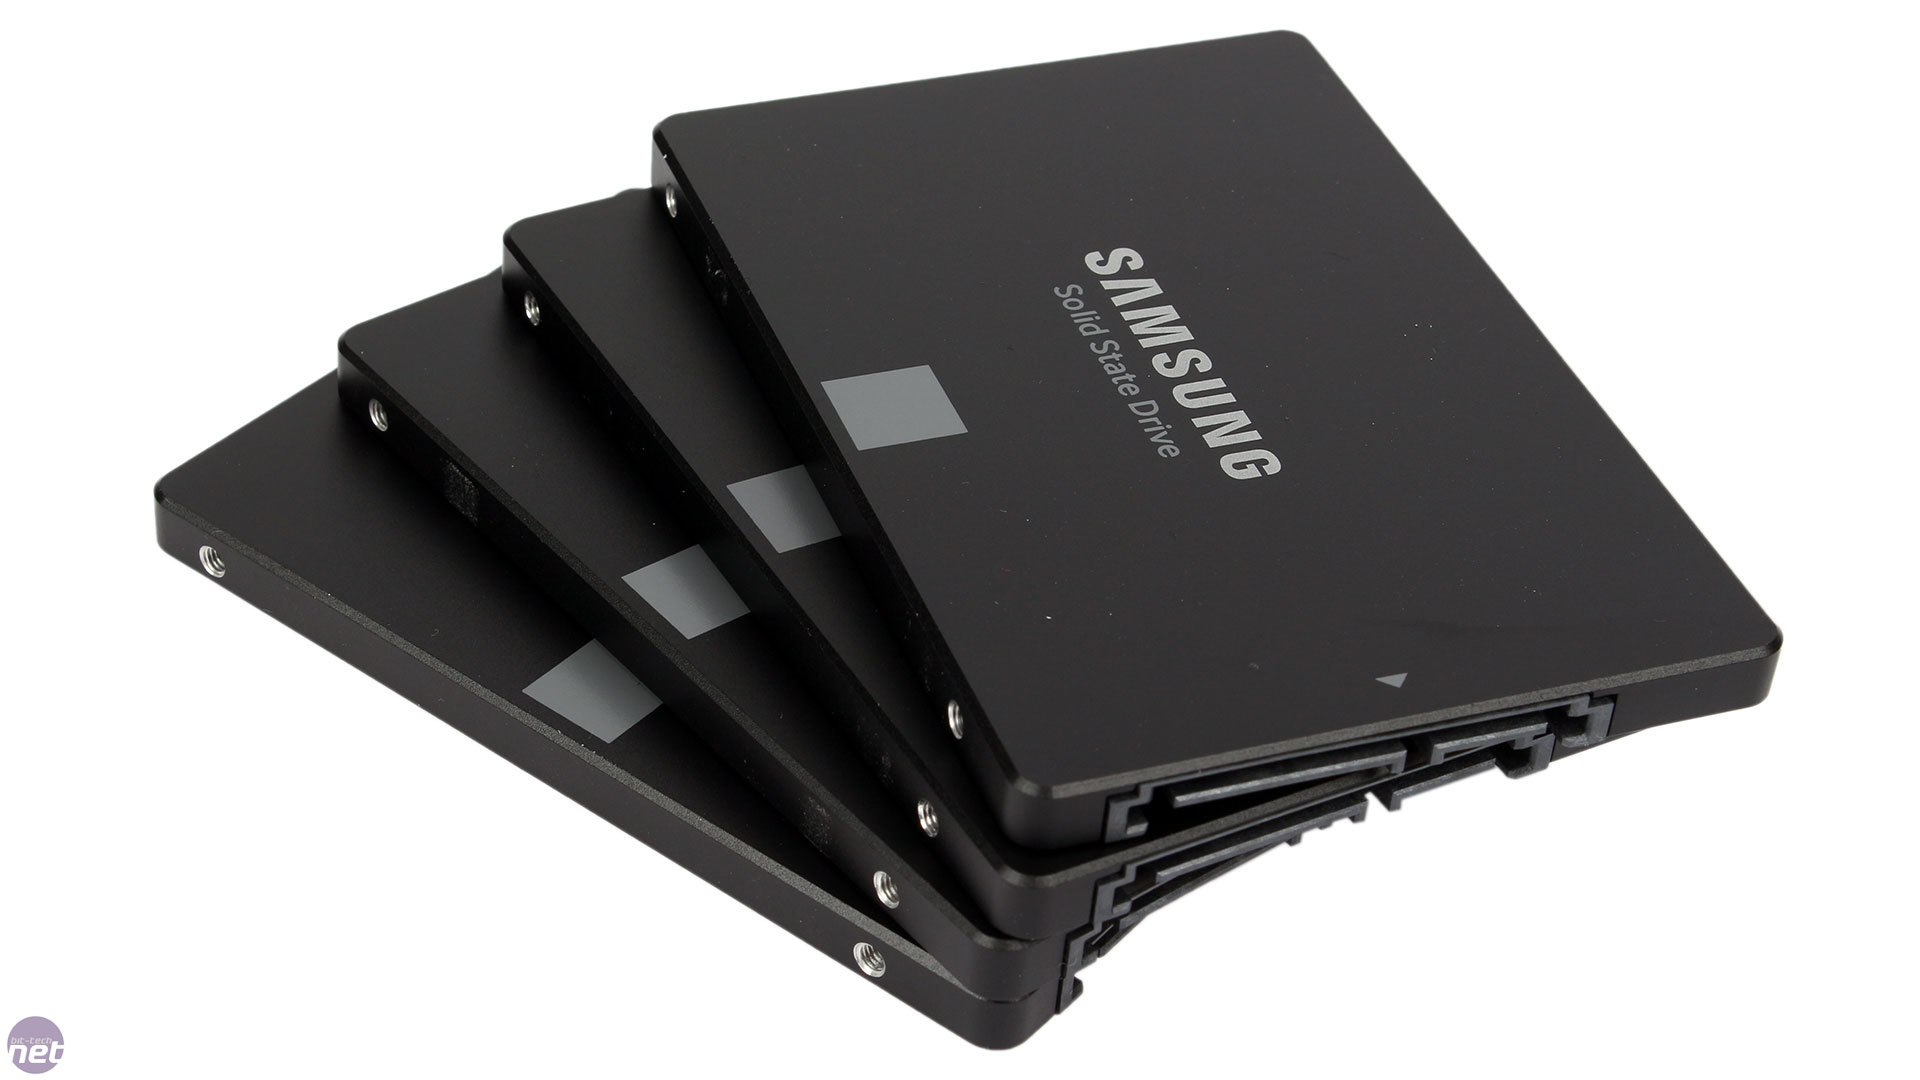 Ssd Samsung 860 120gb